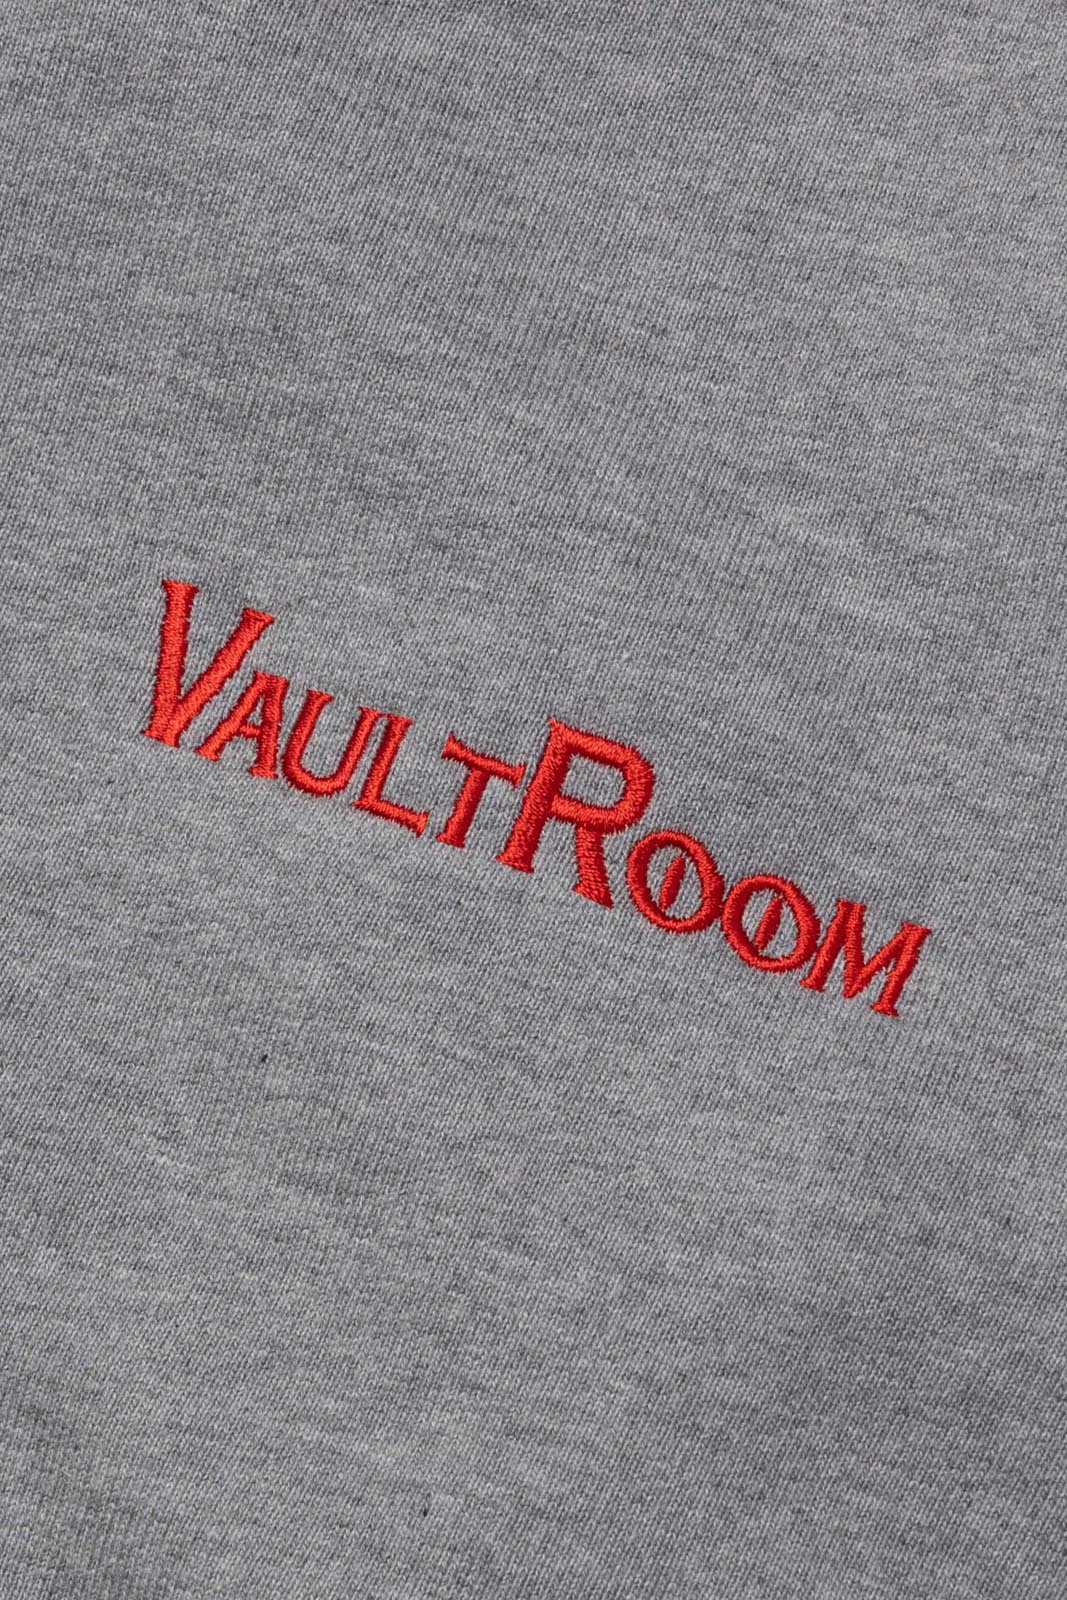 Vaultroom × Monster Hunter Rathalos  GRY